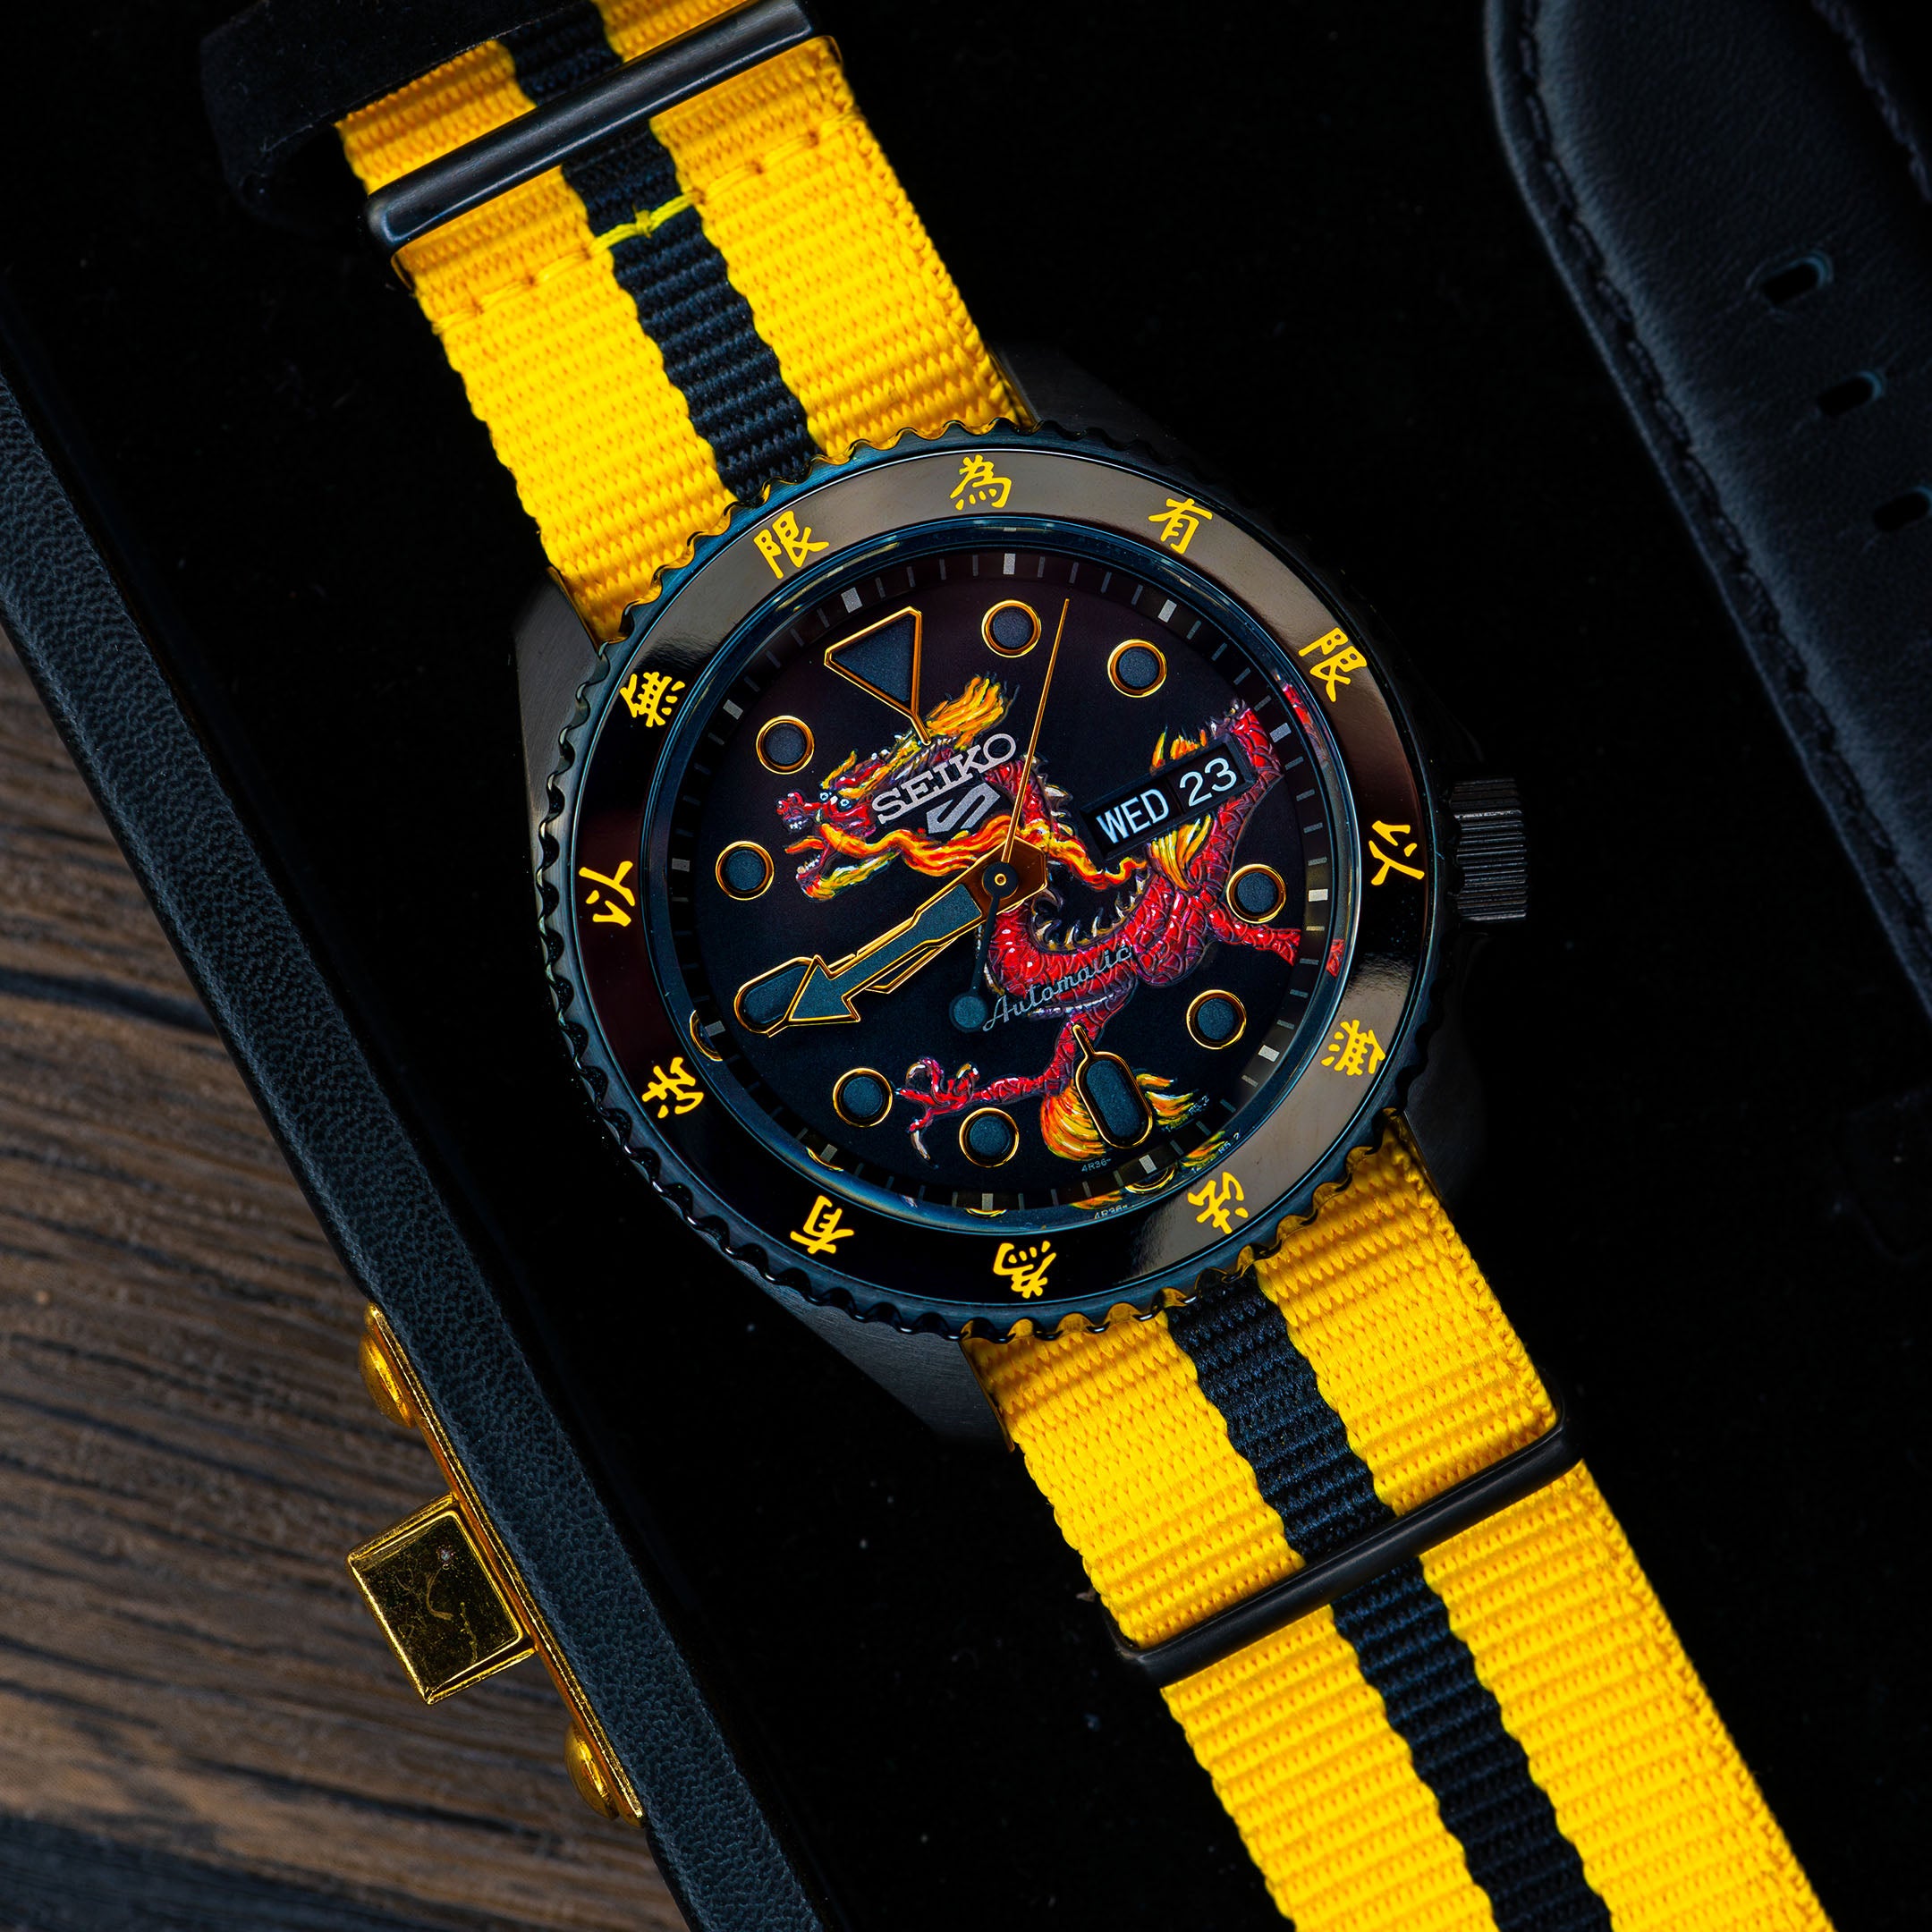 Unique timepiece featuring exquisite hand-painted dial artwork